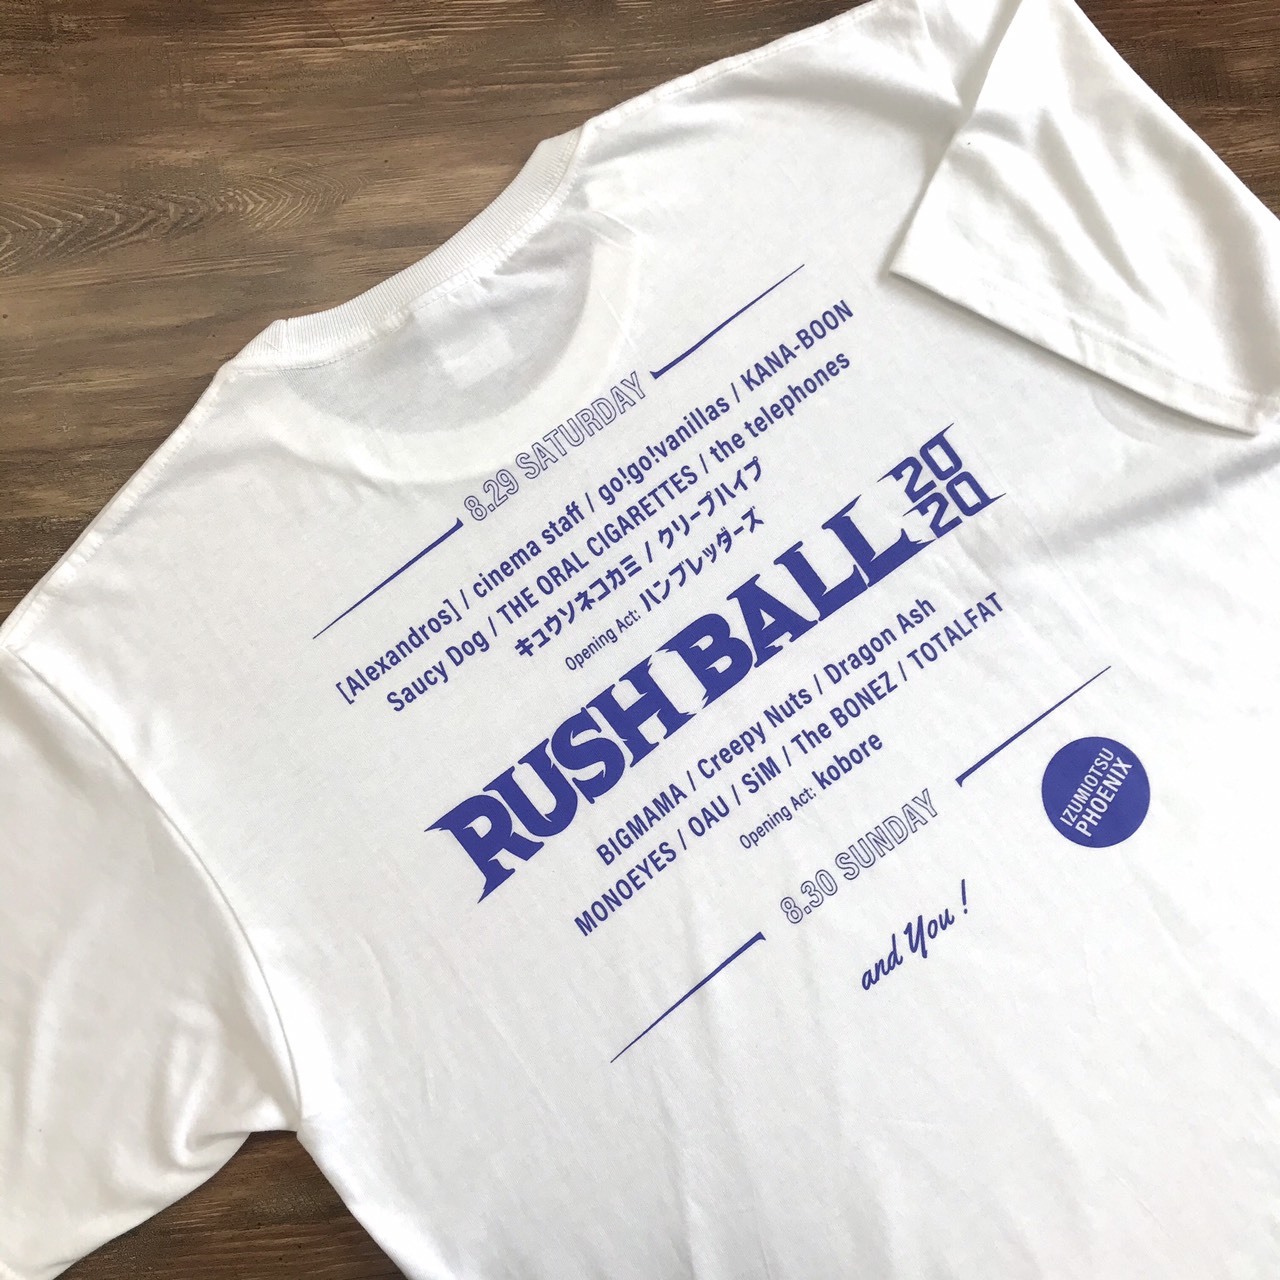 RUSH BALL 2020』 未来へ繋ぐTシャツ販売開始「来年に向けての次なる